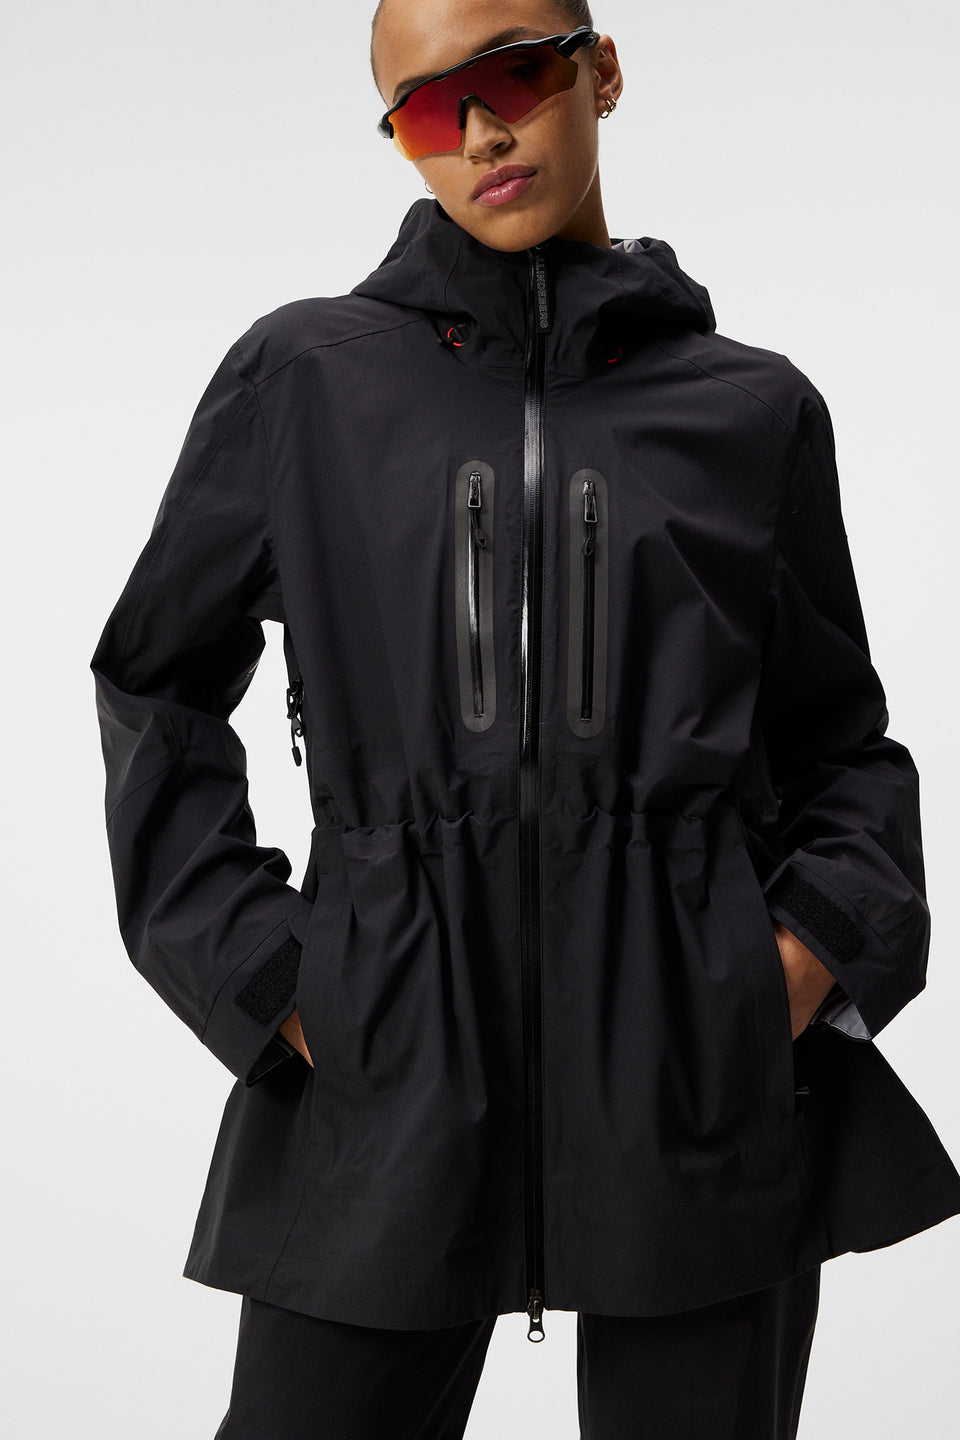 J.Lindeberg Women's Crystal Hoodie Jacket (Activewear,Jackets)